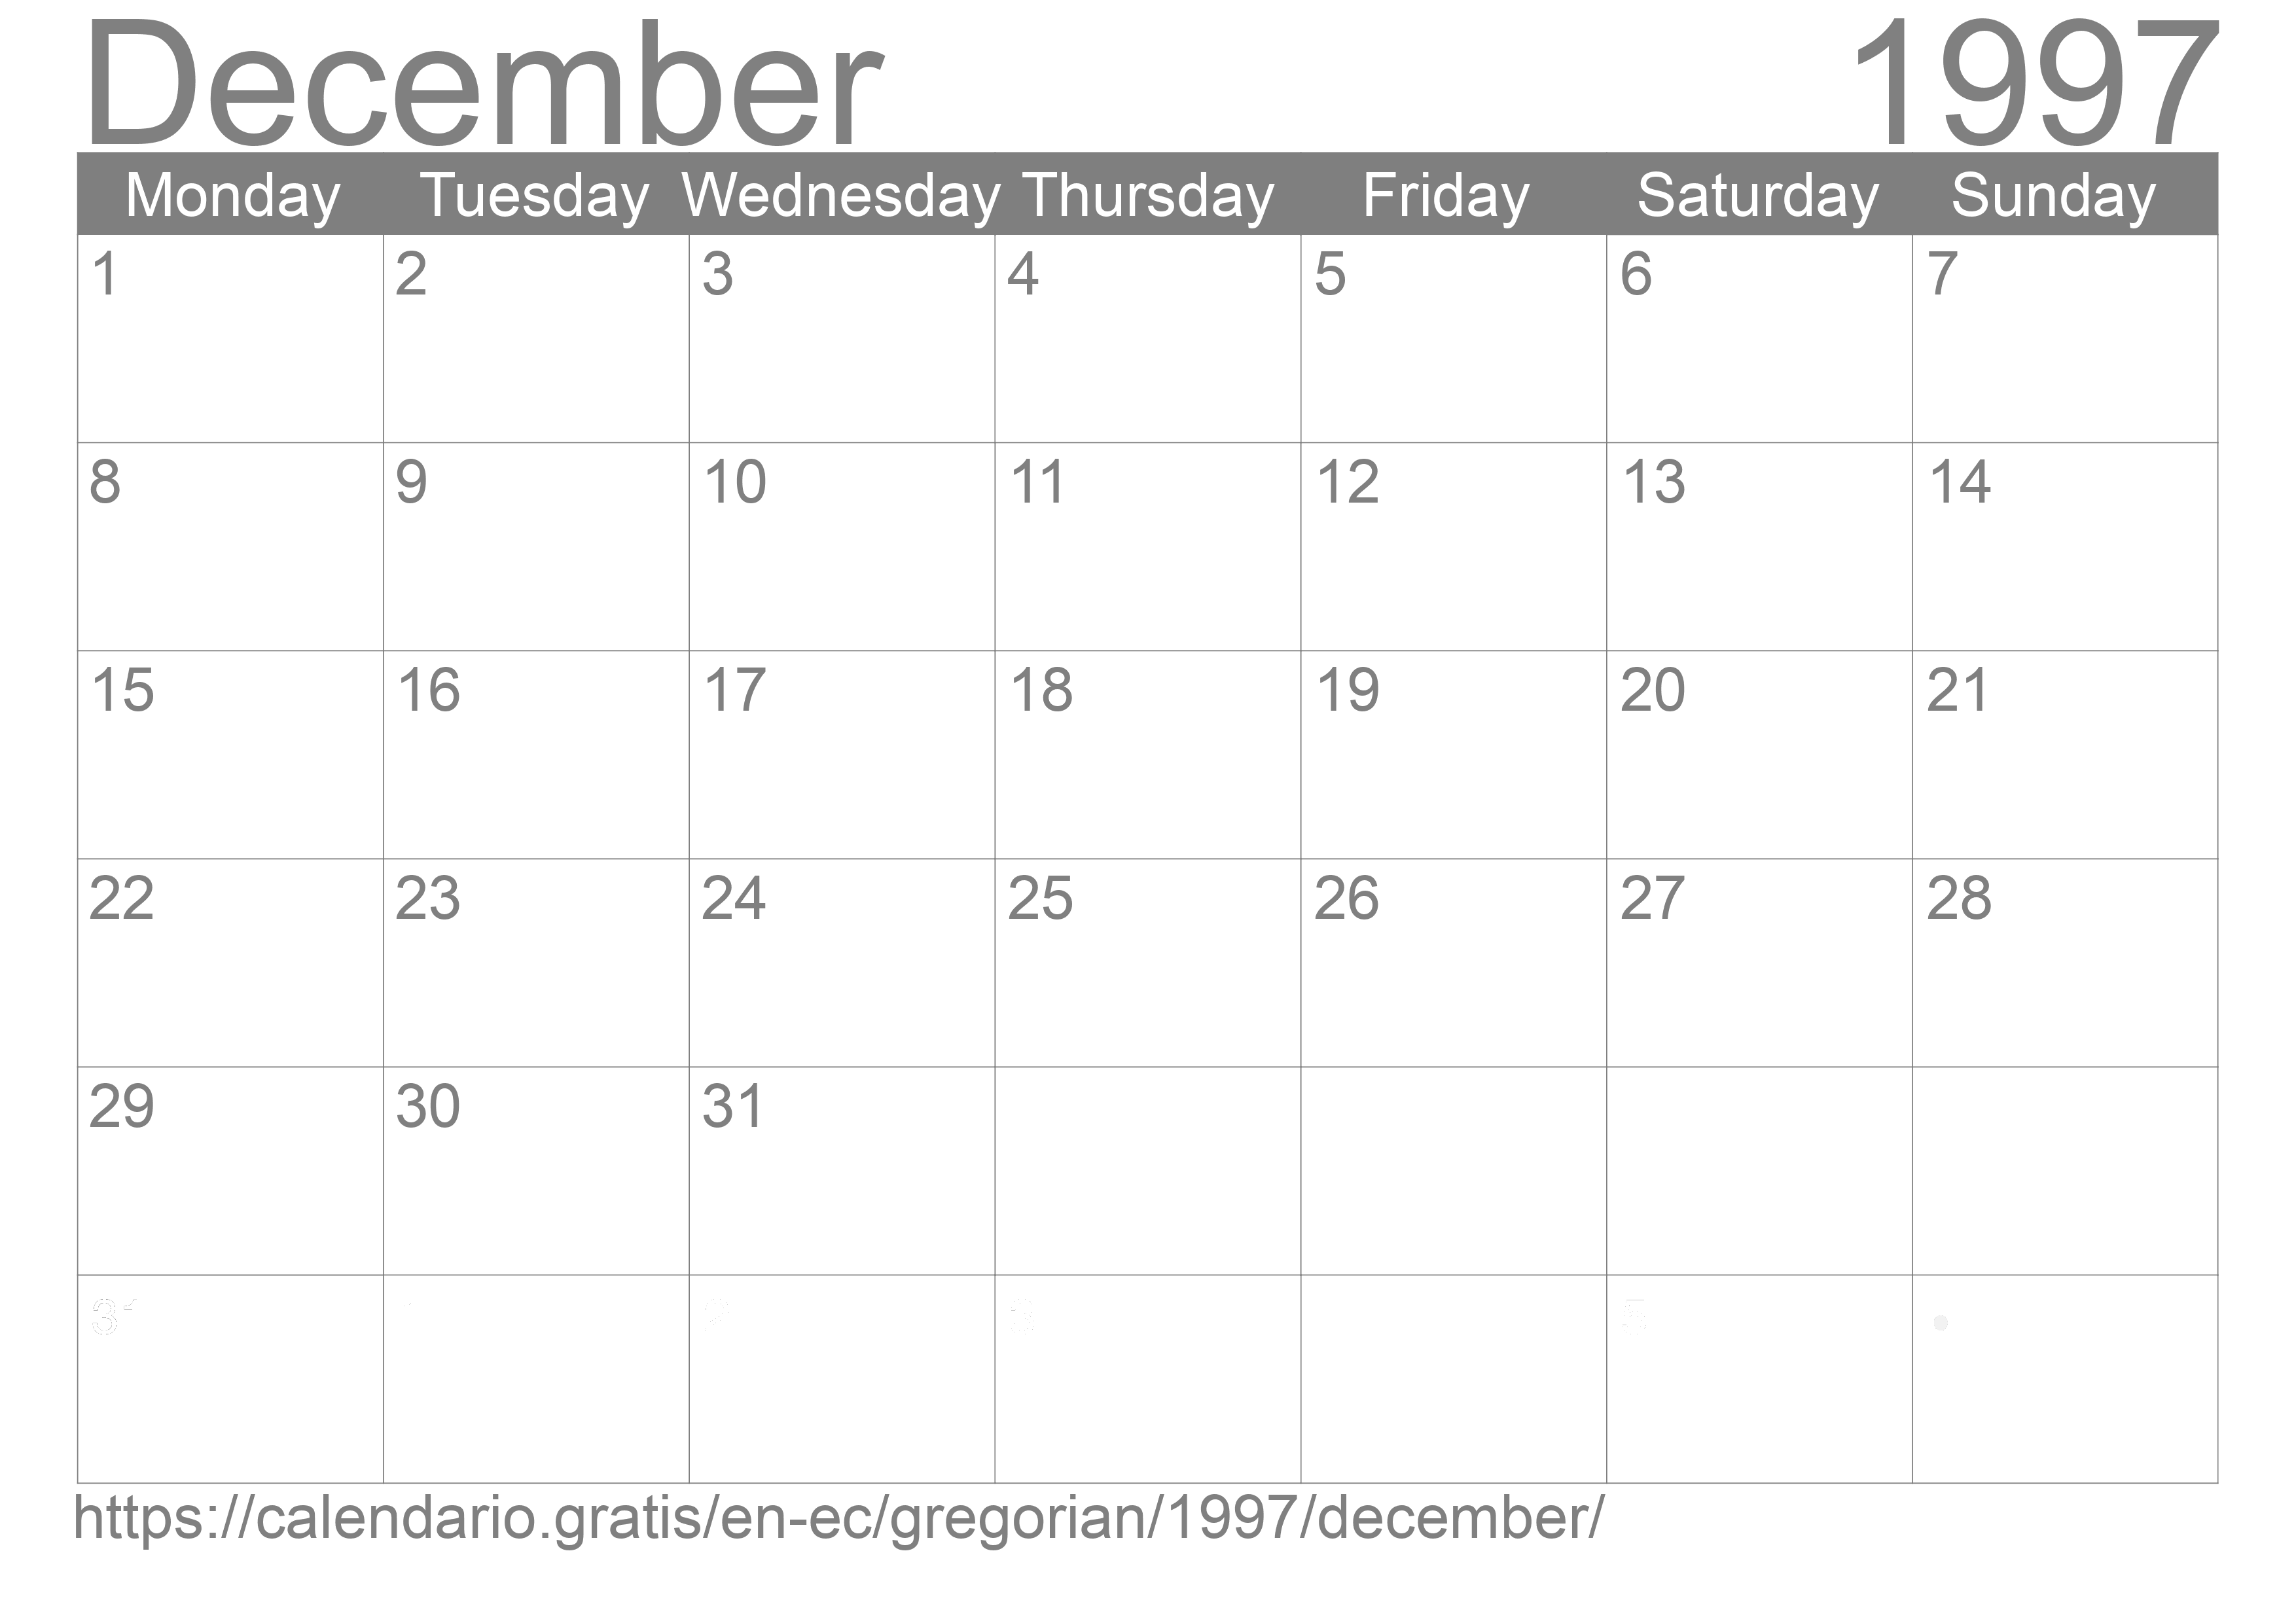 Calendar December 1997 to print